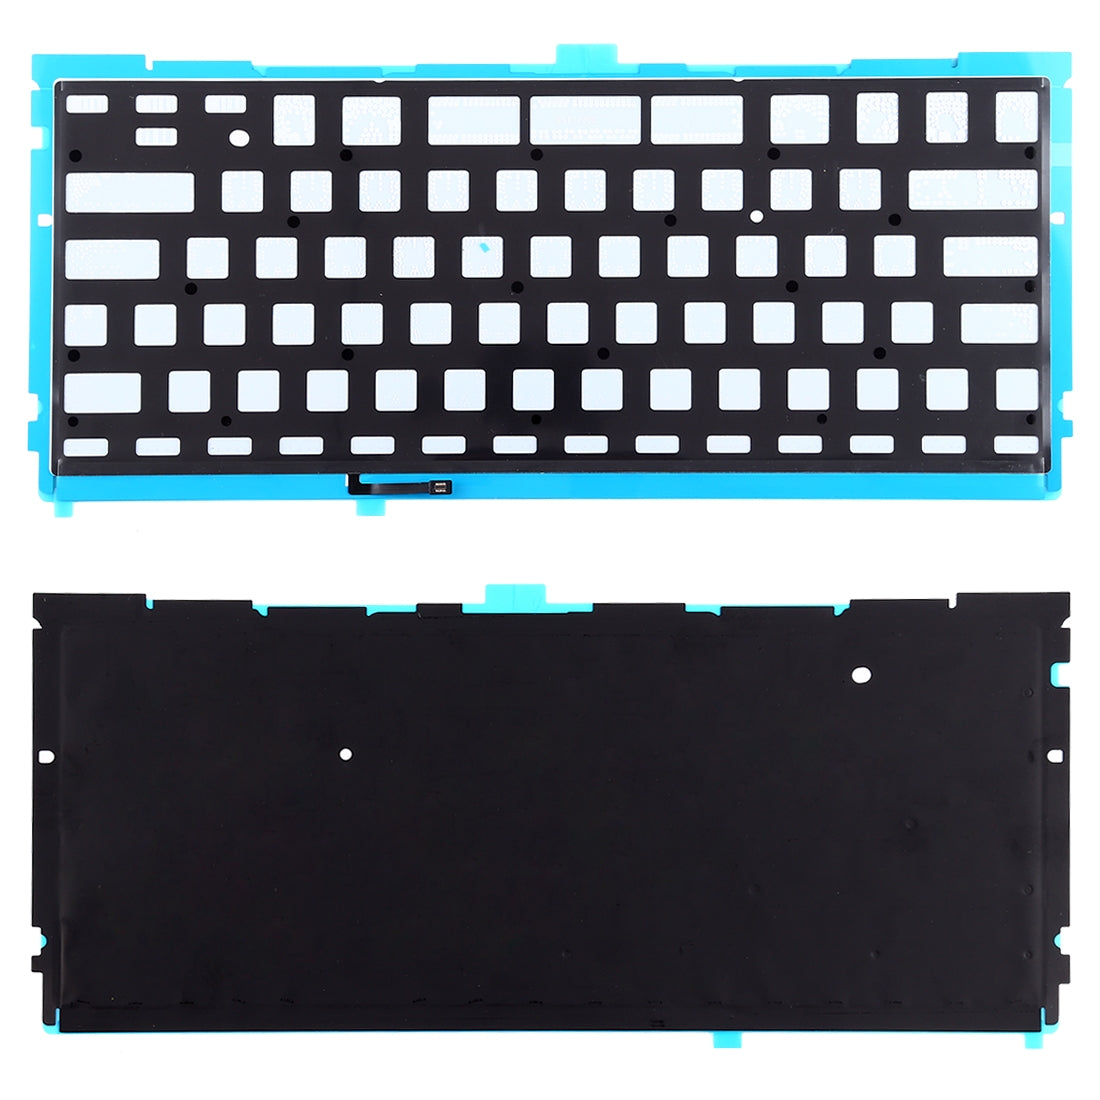 Backlight Keyboard US Version without ñ Apple MacBook Pro 15.4 A1398